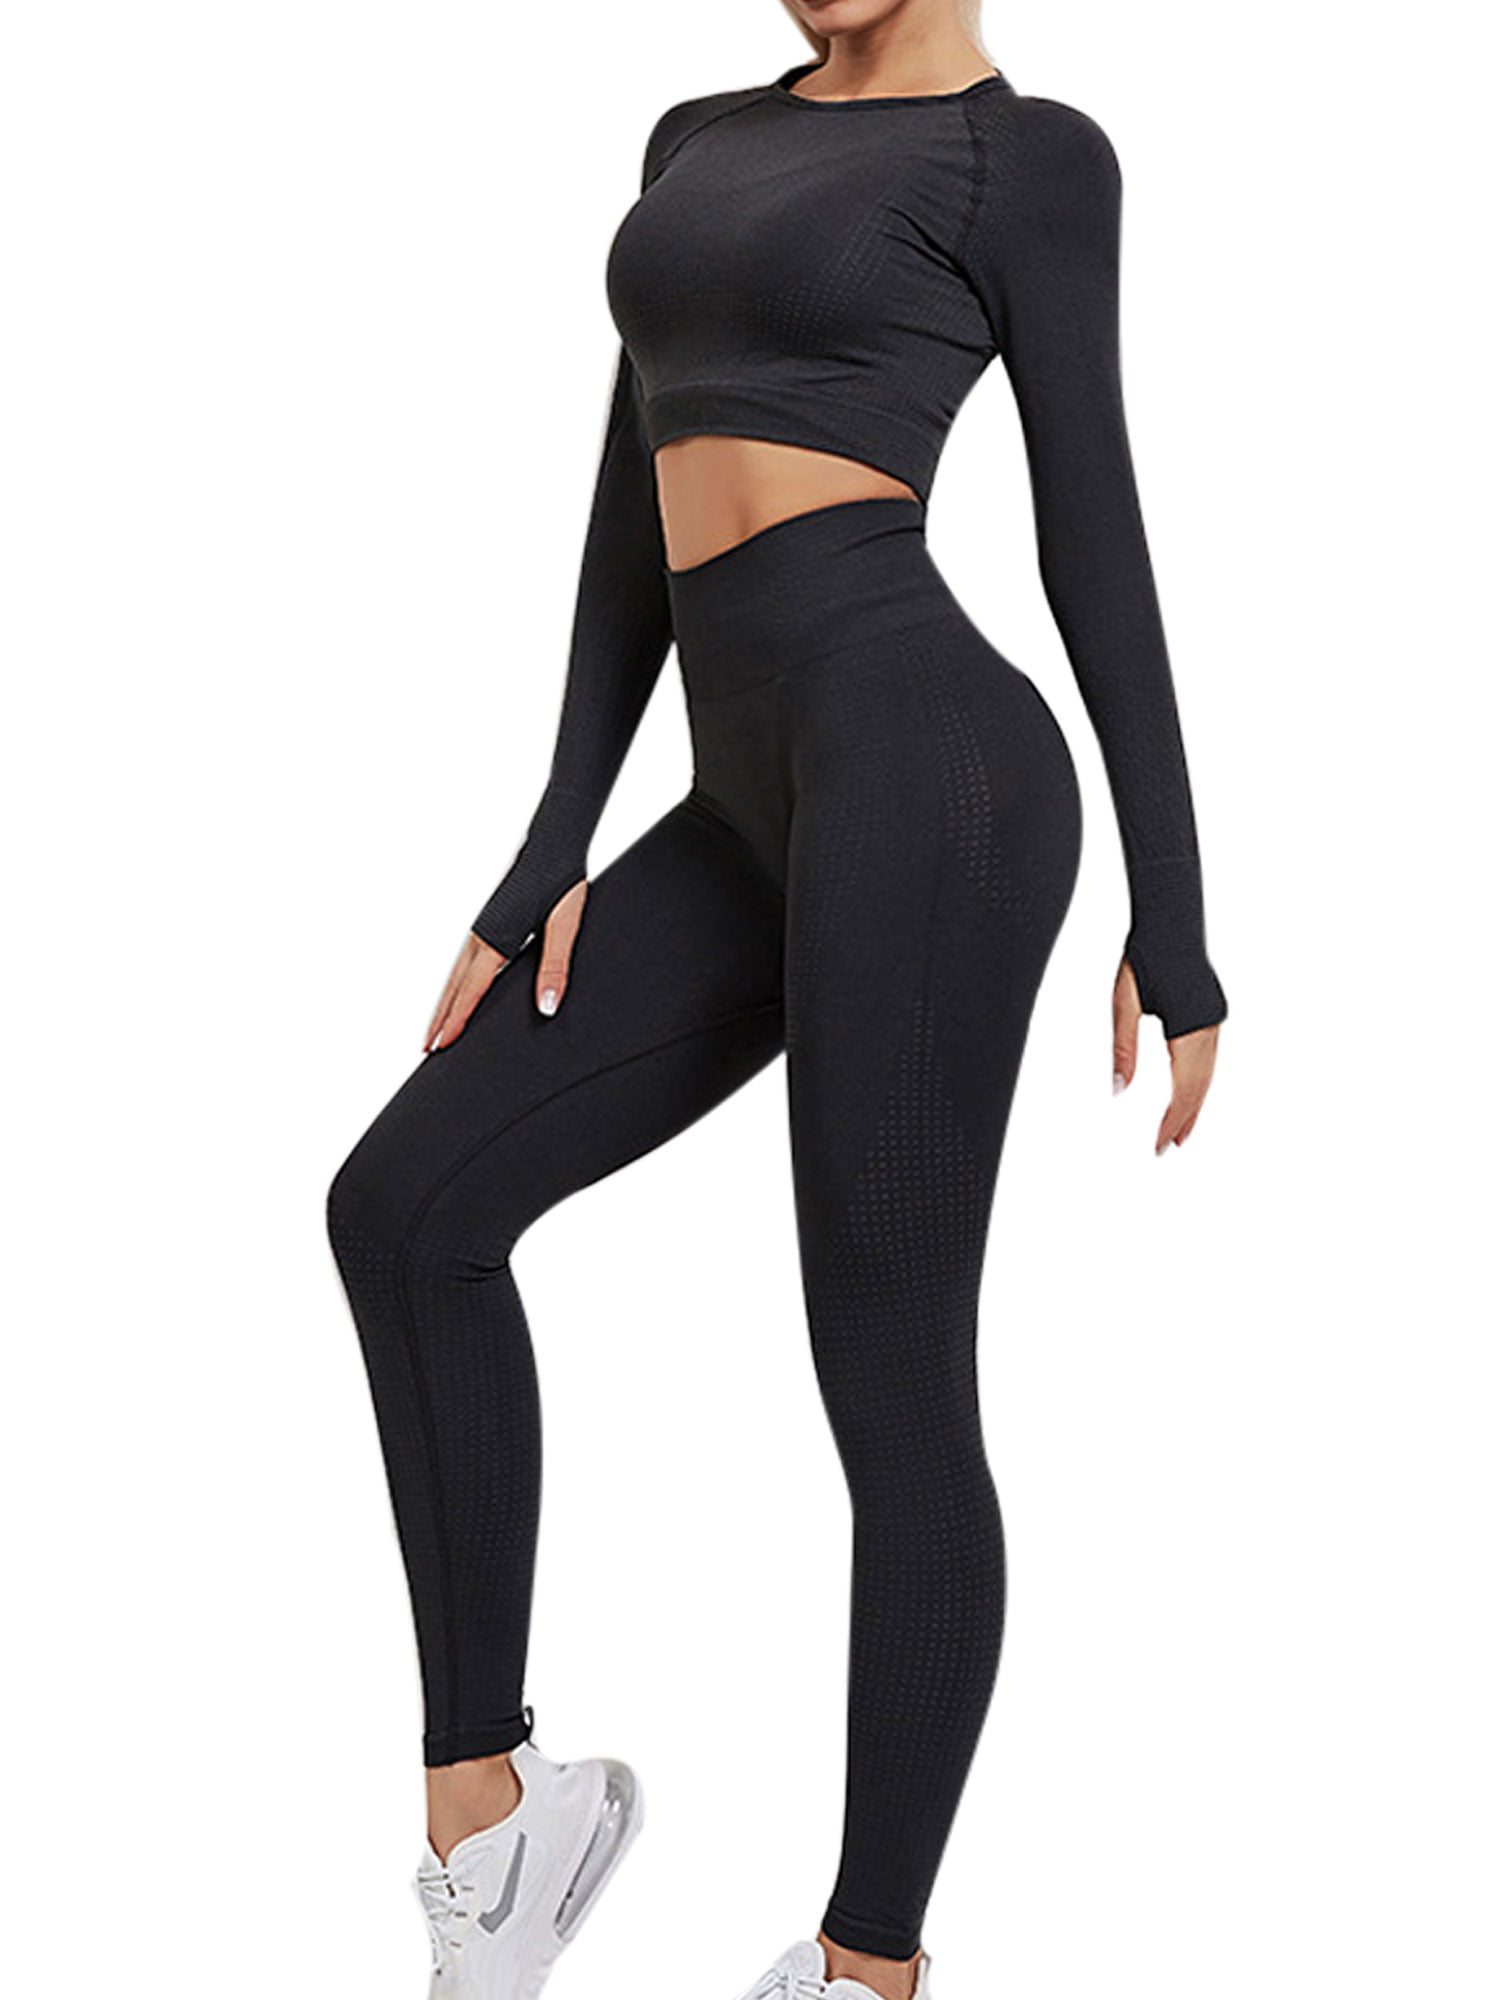 Women YOGA Bra Workout Gym Fitness Leggings Pants Athletic Sports Clothes Set